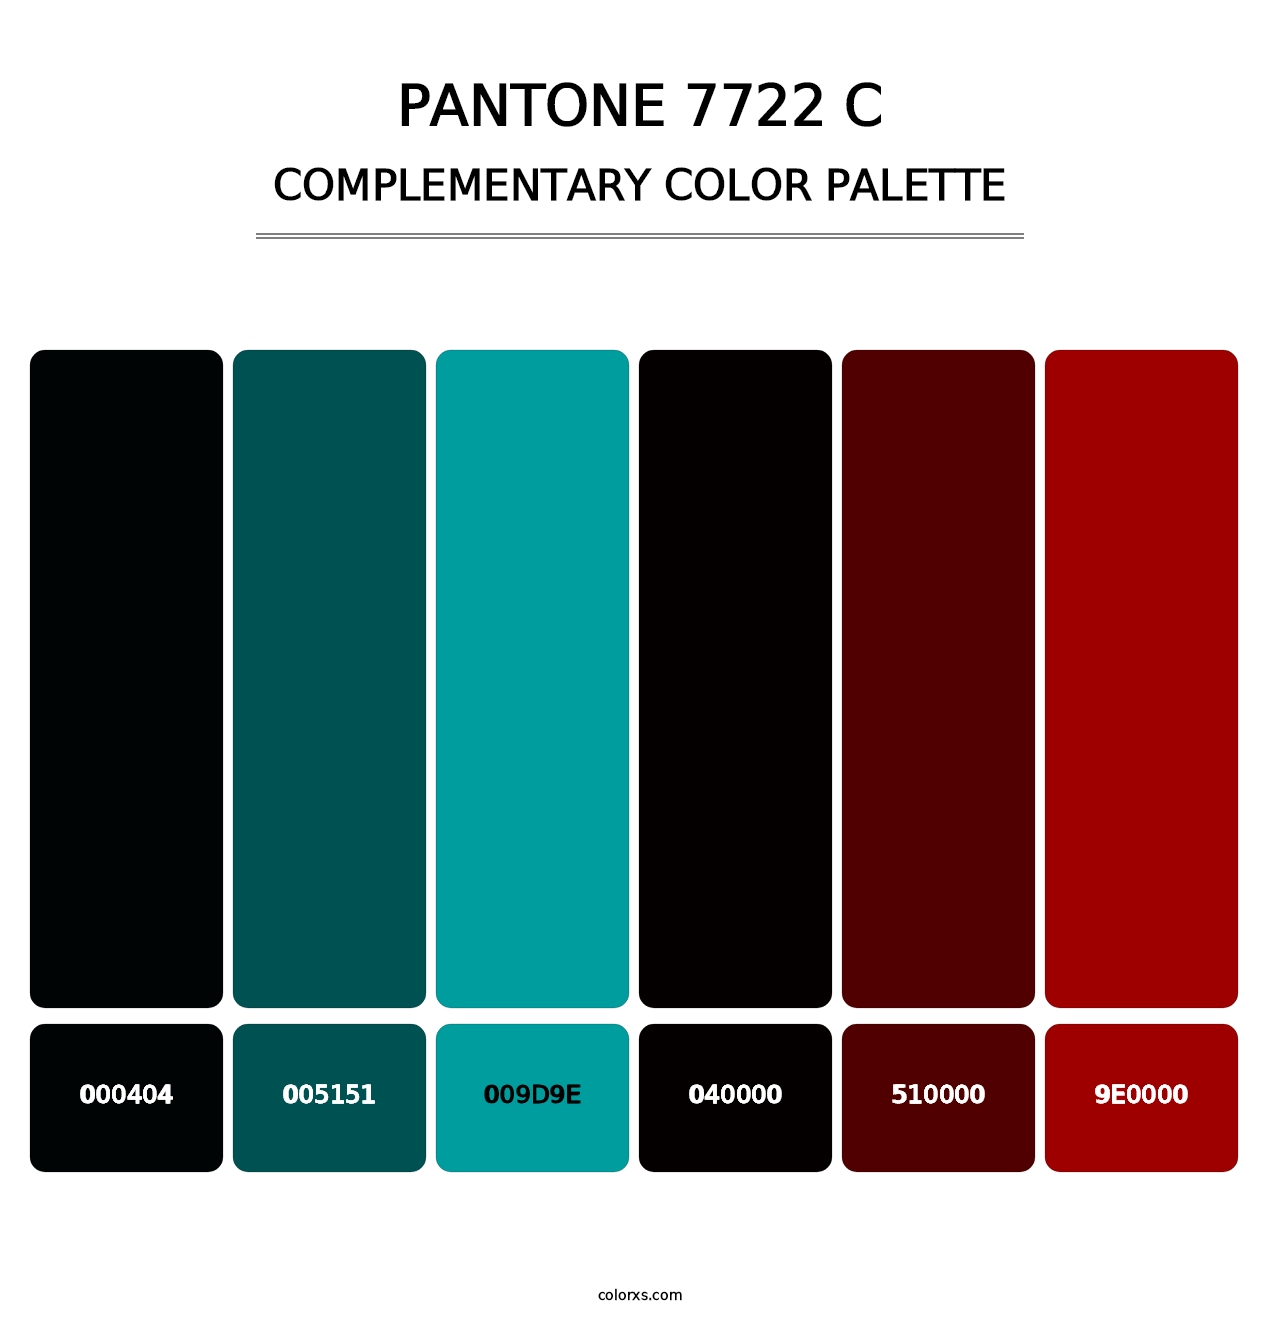 PANTONE 7722 C - Complementary Color Palette